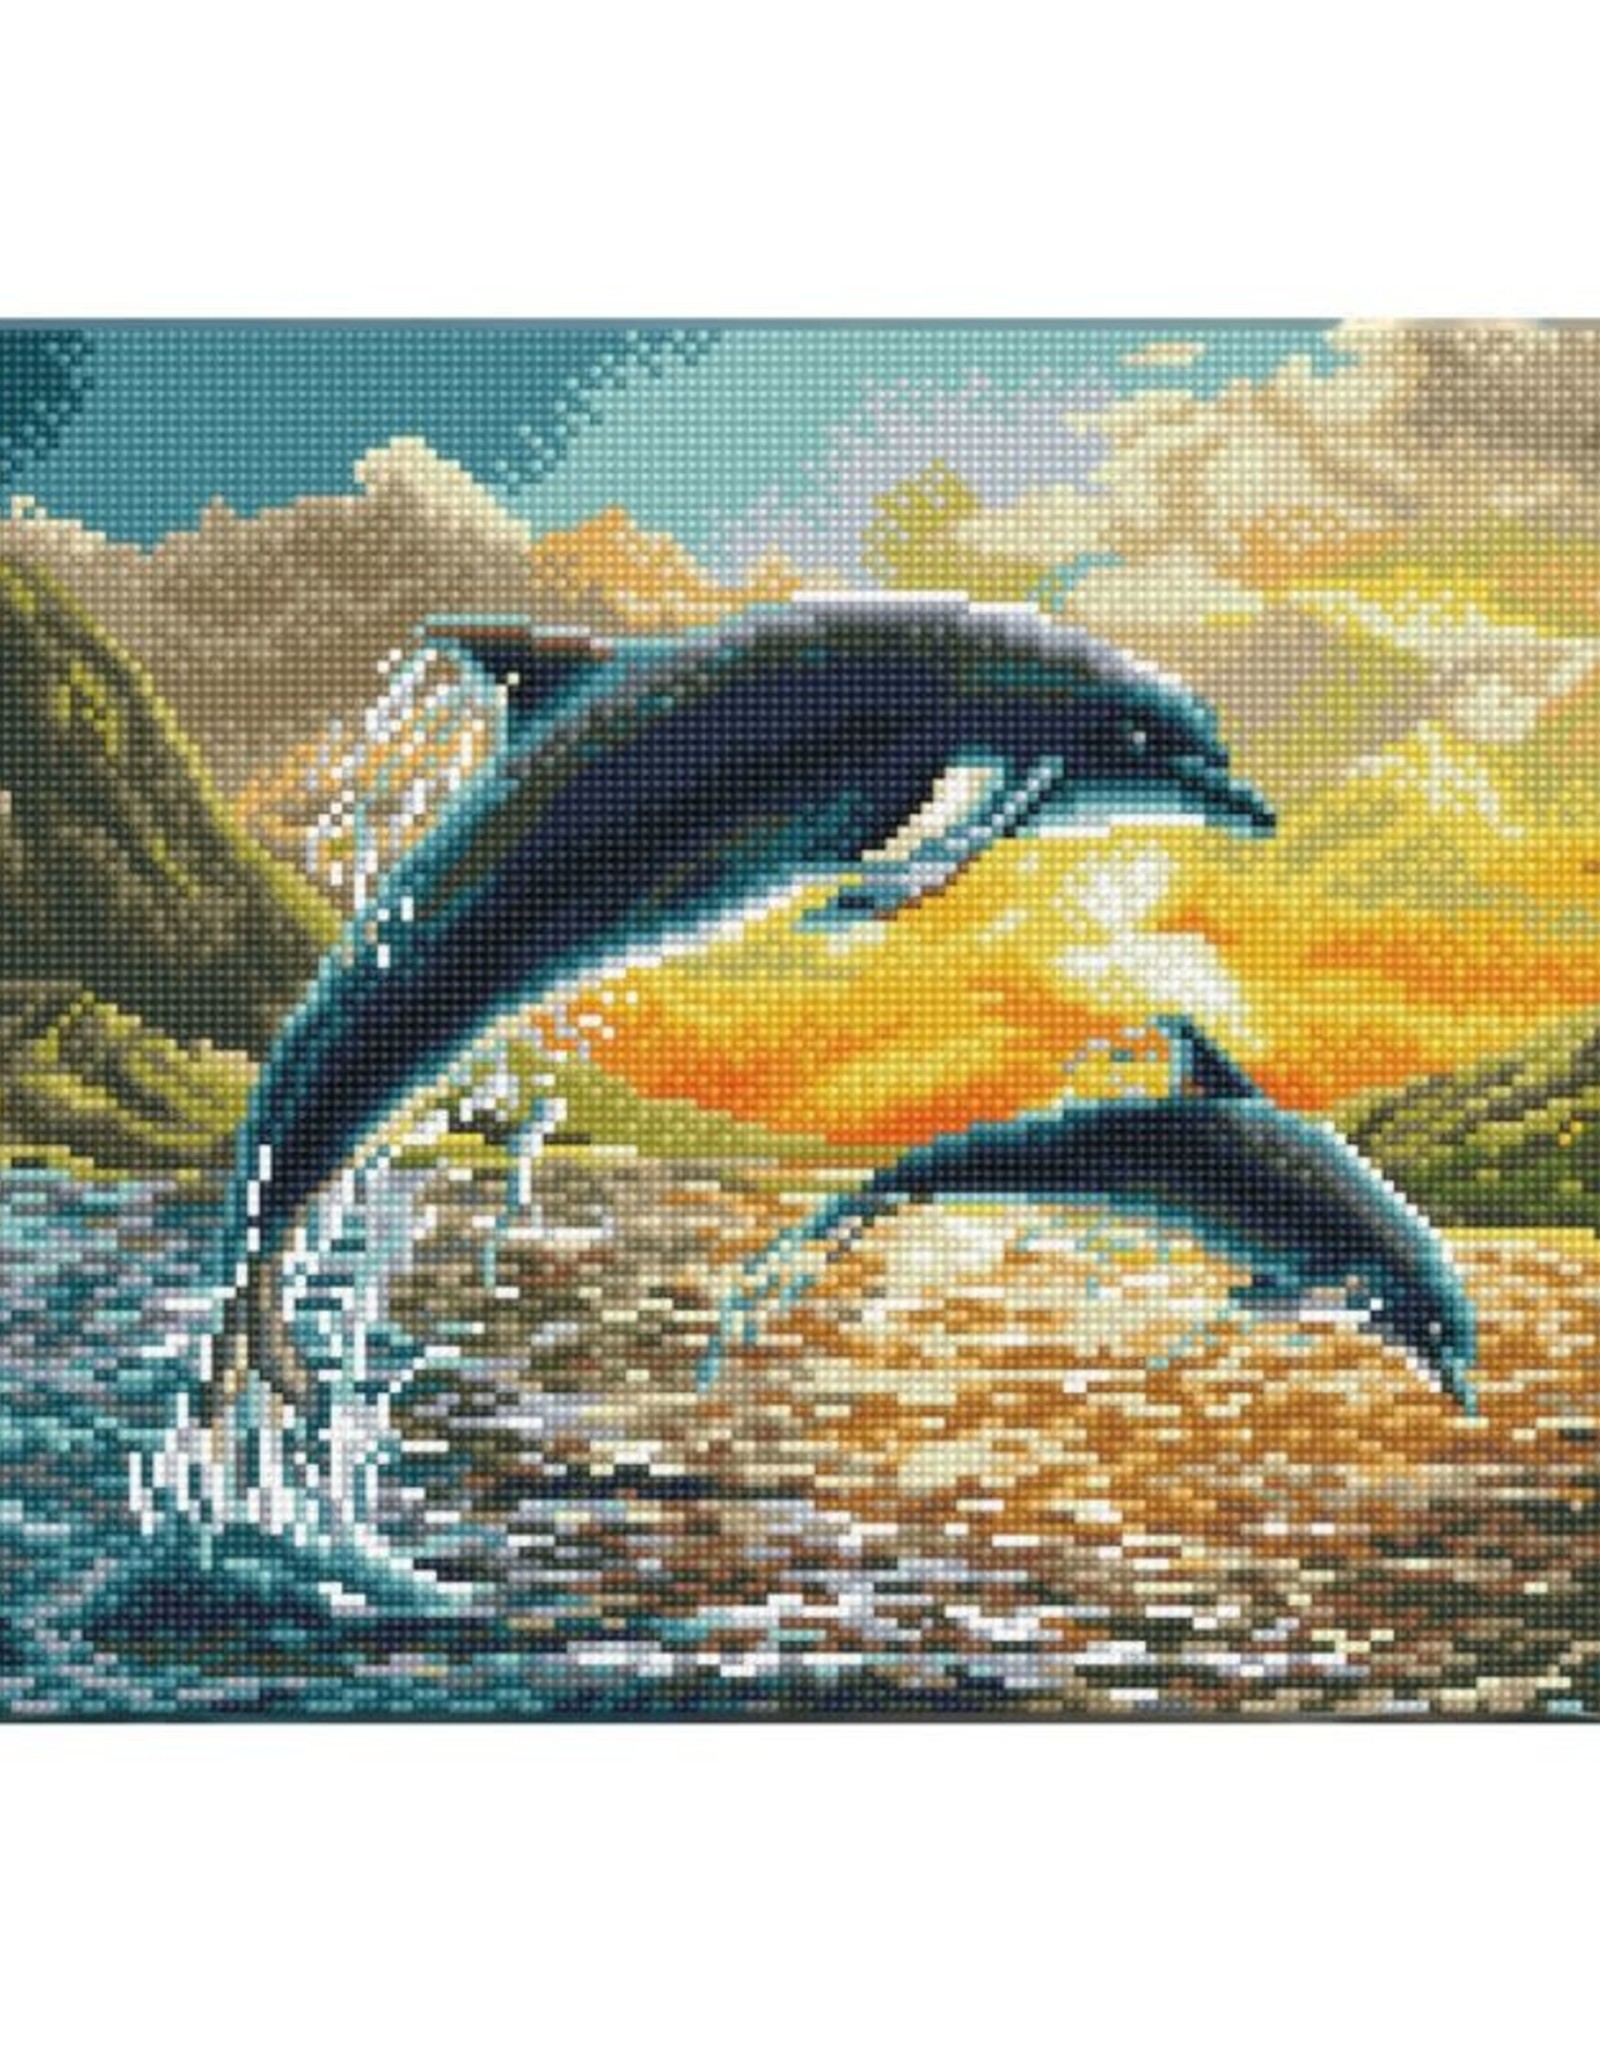 Dolphin Sunset Diamond Art Painting Kit - Family Fun Hobbies